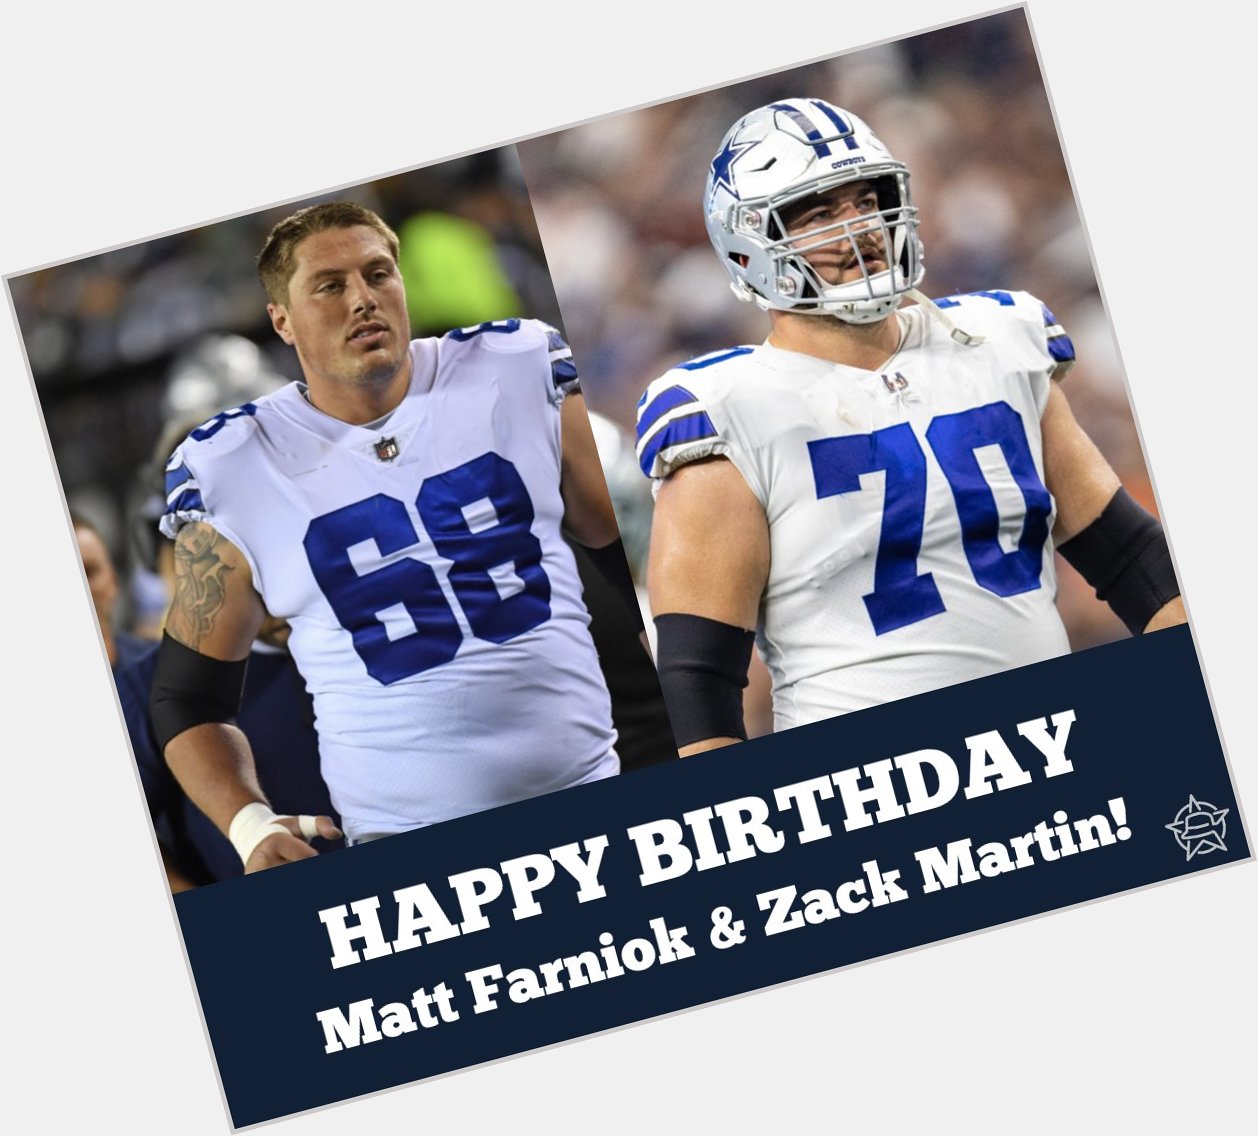 Birthdays on Game Day!

Help us wish Matt Farniok and Zack Martin a very happy birthday as they take on the Vikings. 